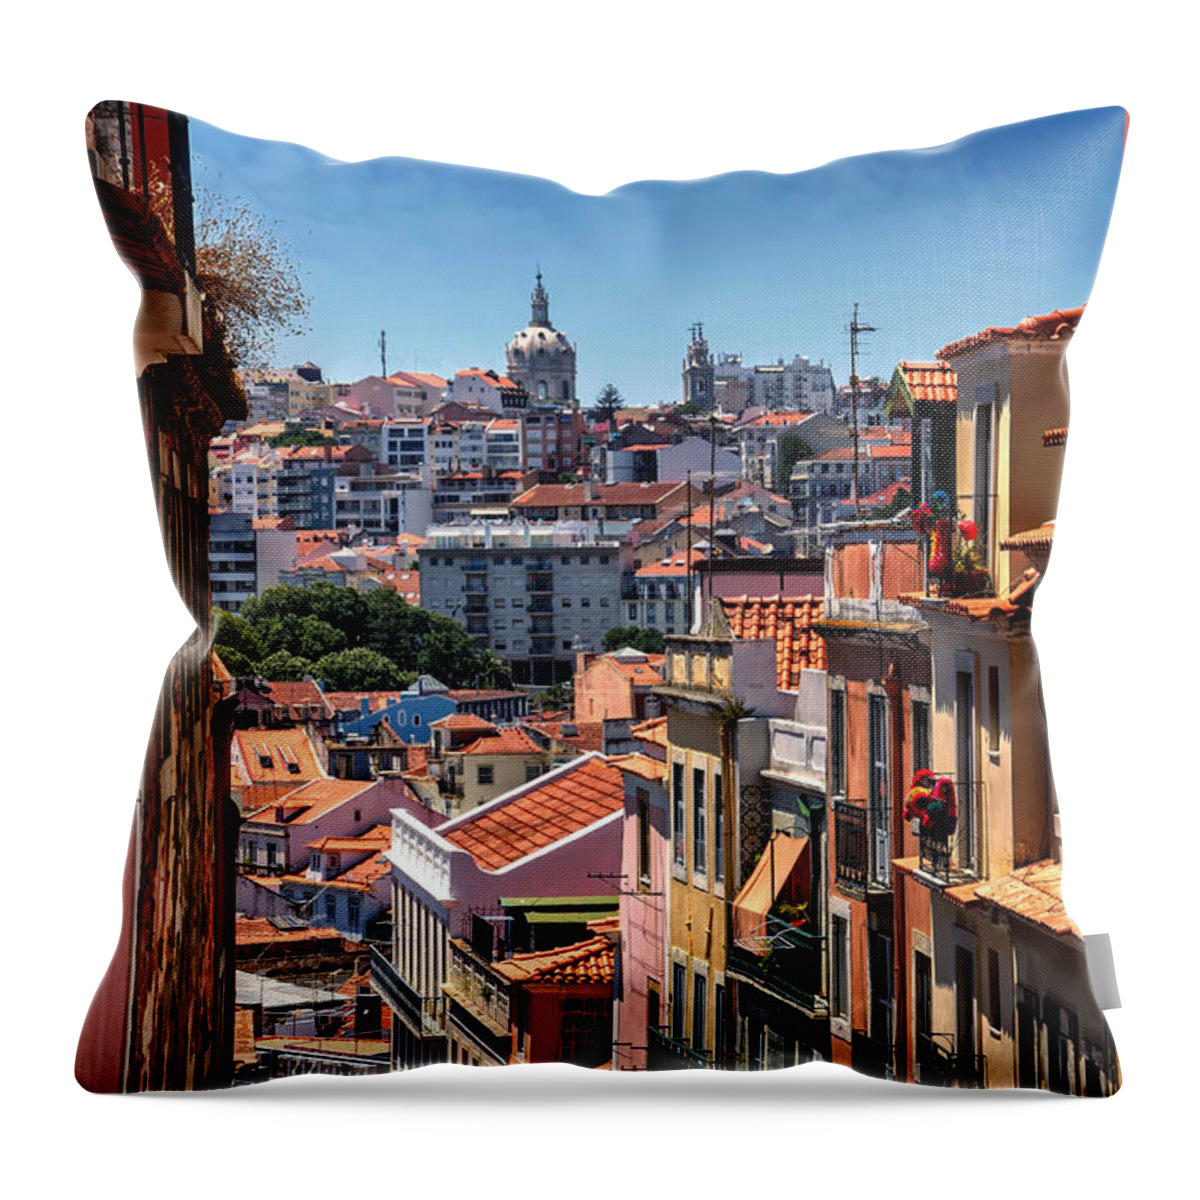 Lisbon Throw Pillow featuring the photograph Luminous Lisbon by Carol Japp